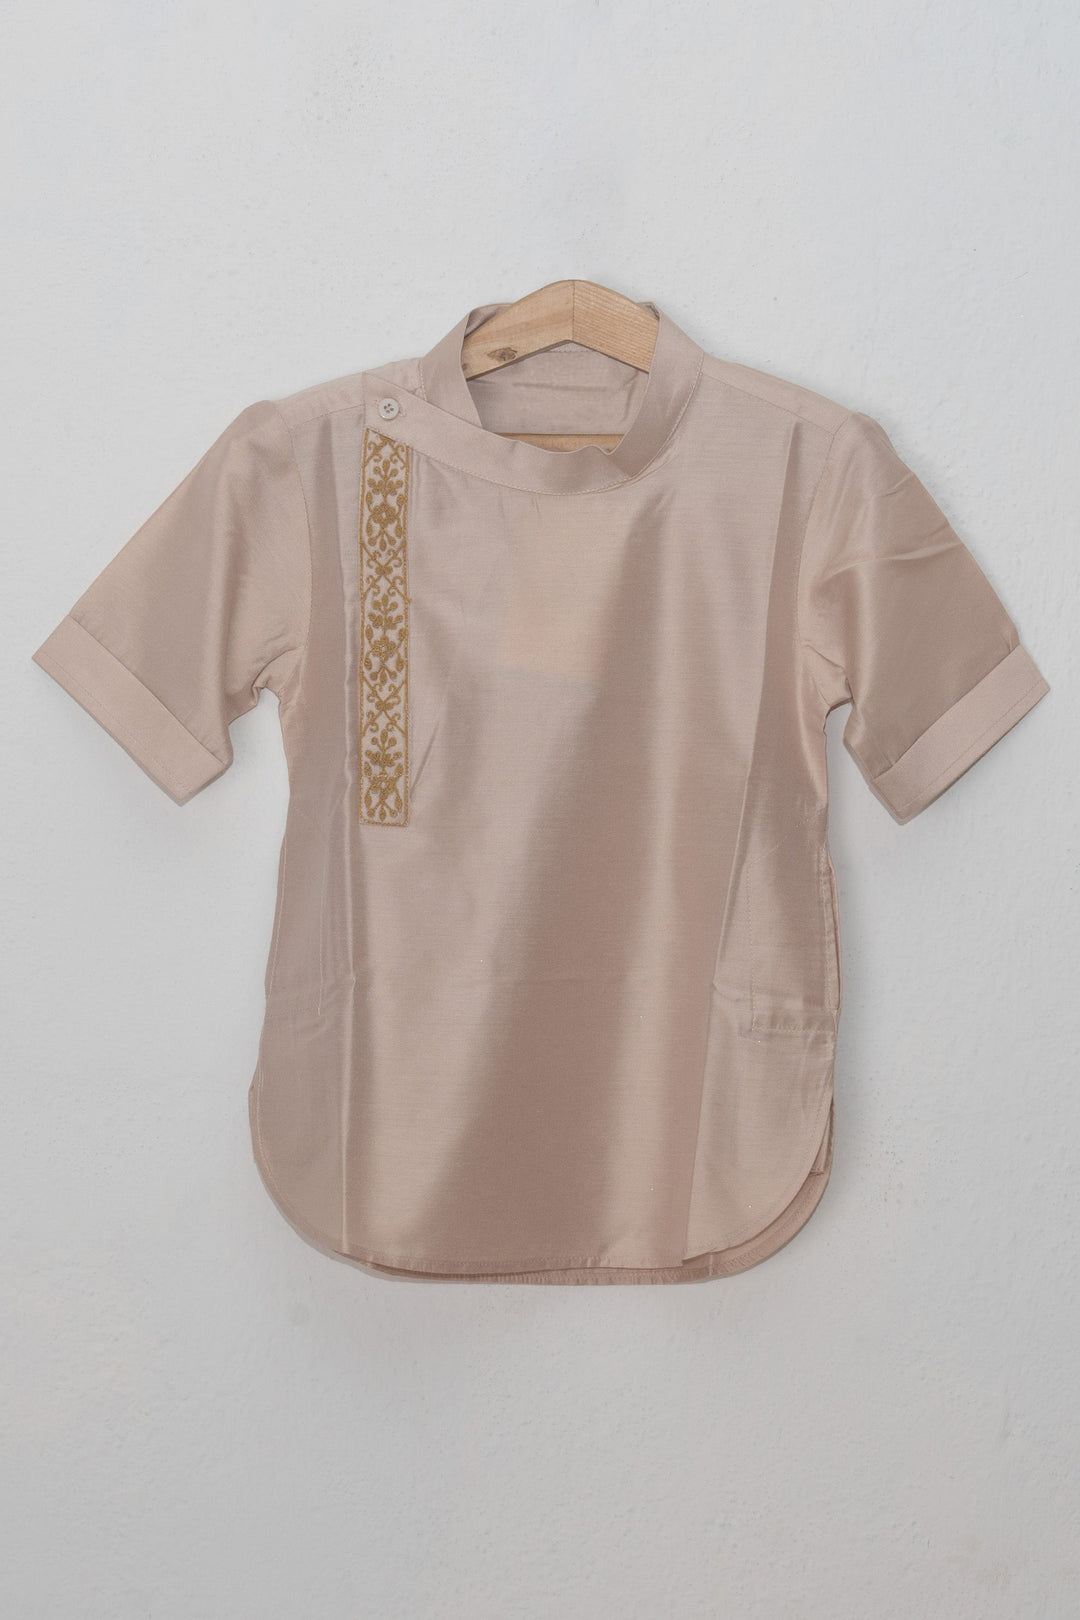 The Nesavu Boys Silk Shirt Gorgeous Beige Soft Cotton Shirt For Little Boys Nesavu 12 (3M) / Beige / Silk Blend BS016B Ethnic Cotton Shirts For Boys | Premium Boys Wear | The Nesavu